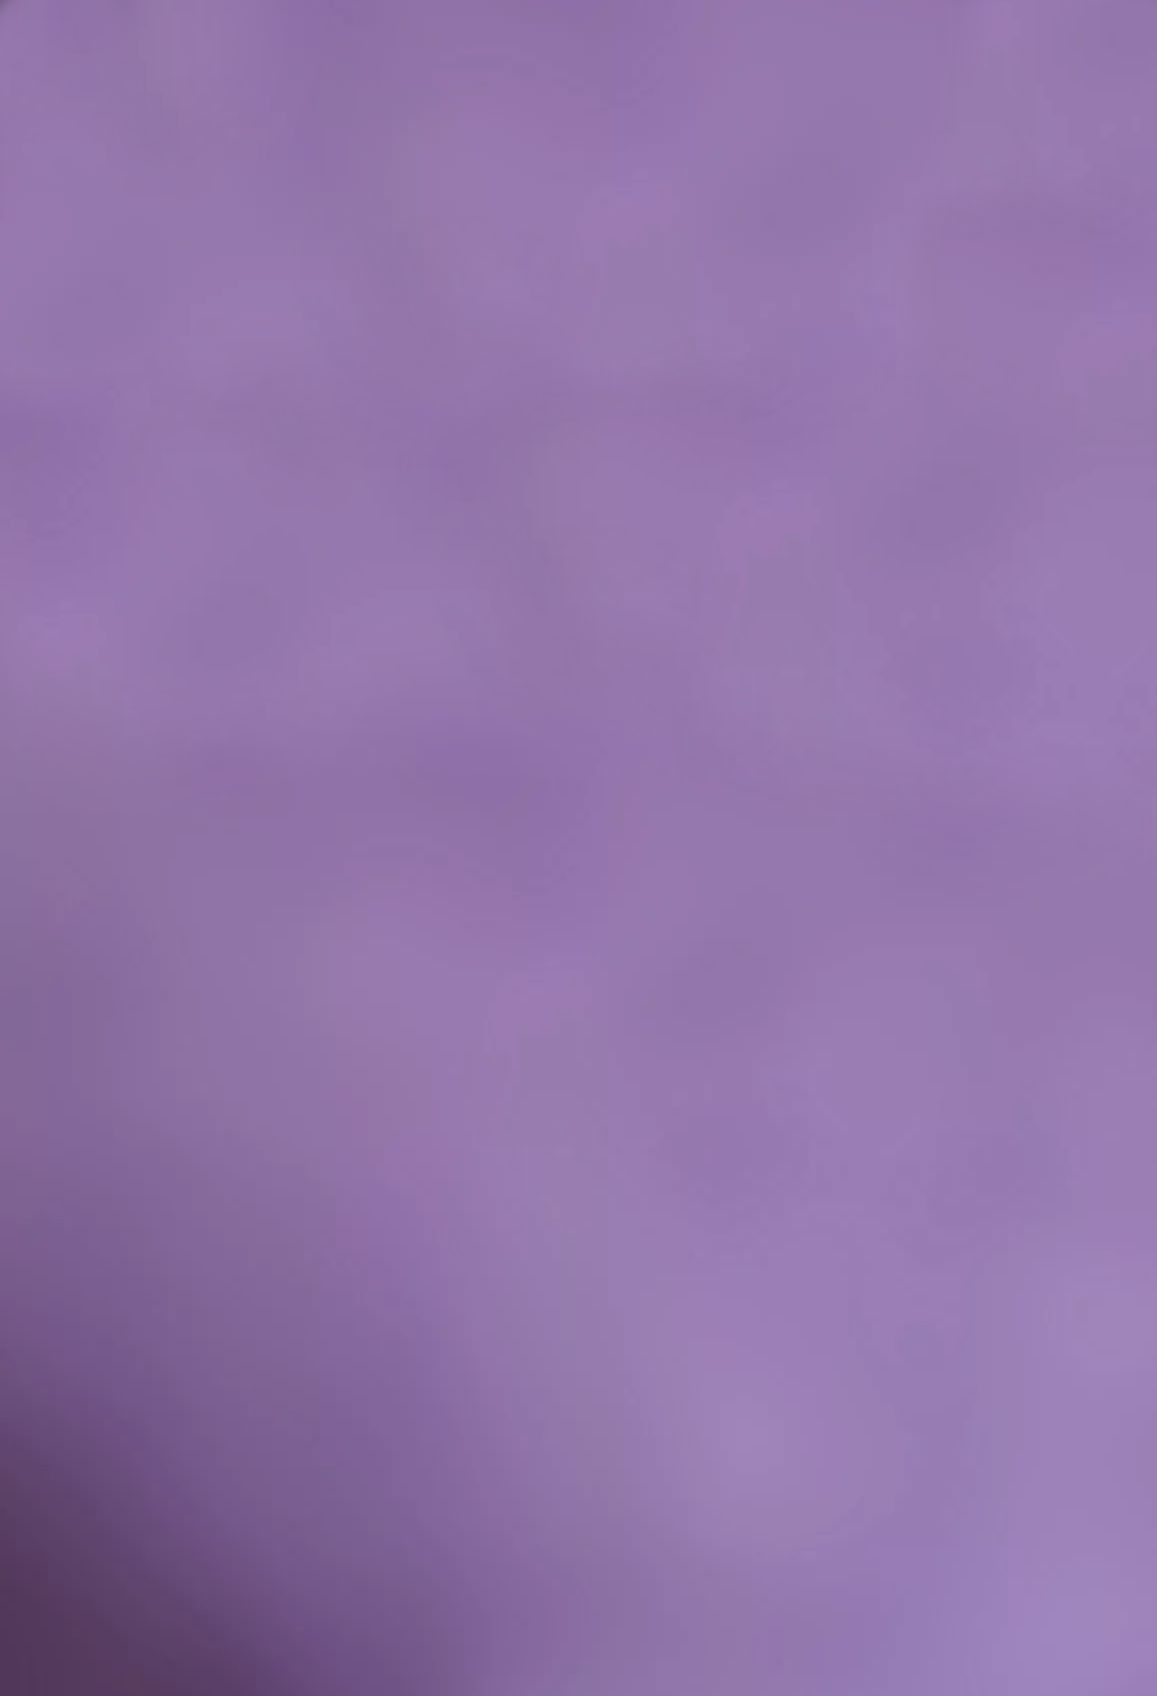 Blurred purple background image